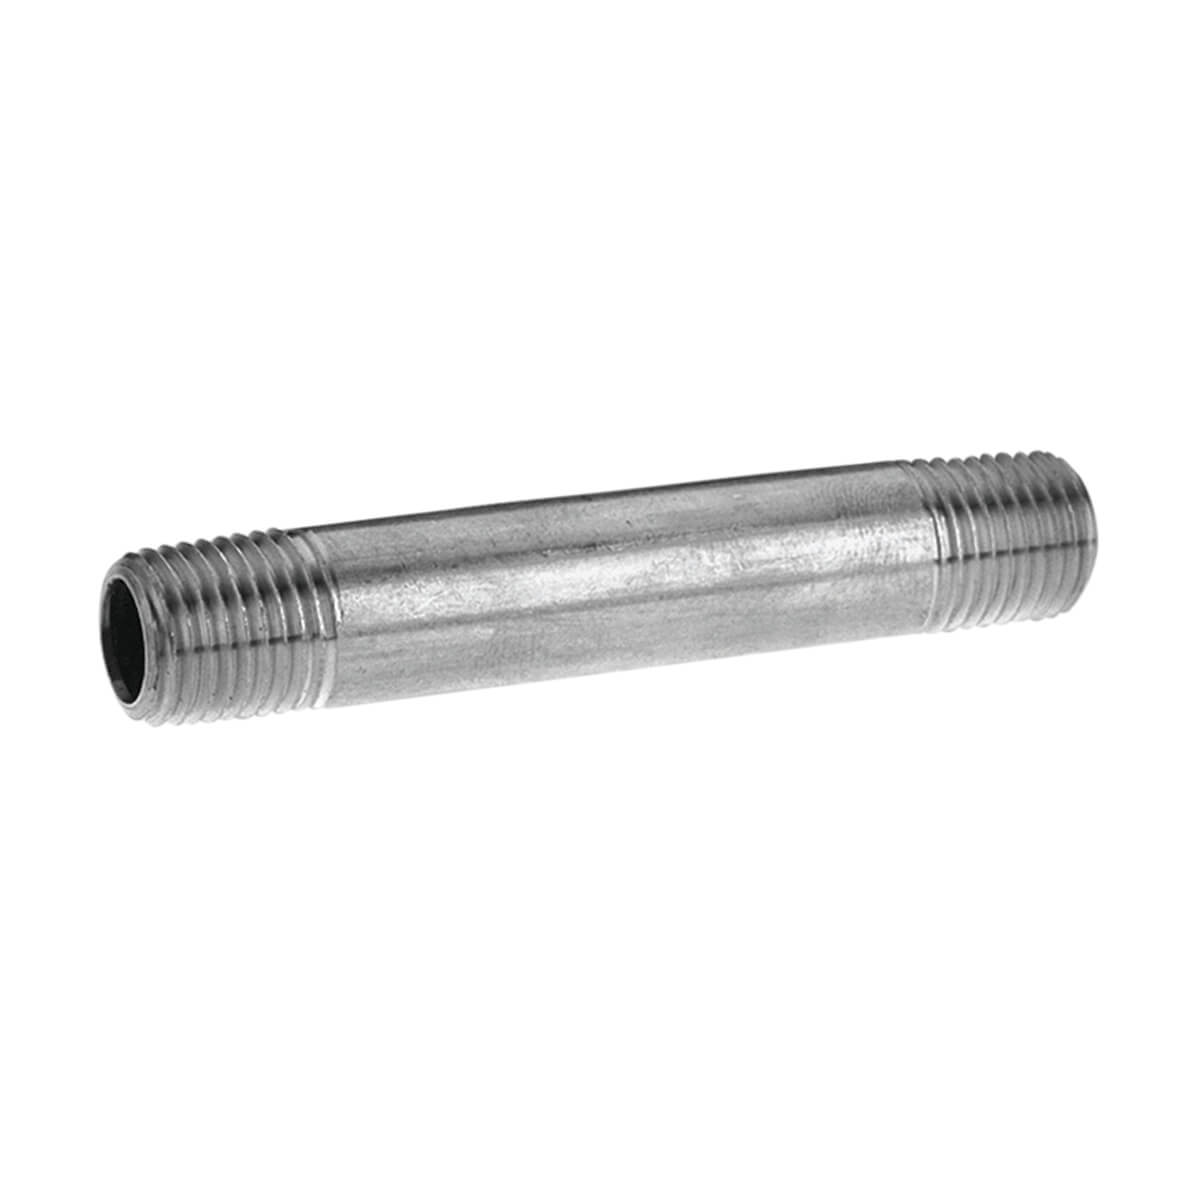 Pipe Nipple Galvanized Steel - 1-1/4-in x 3-in